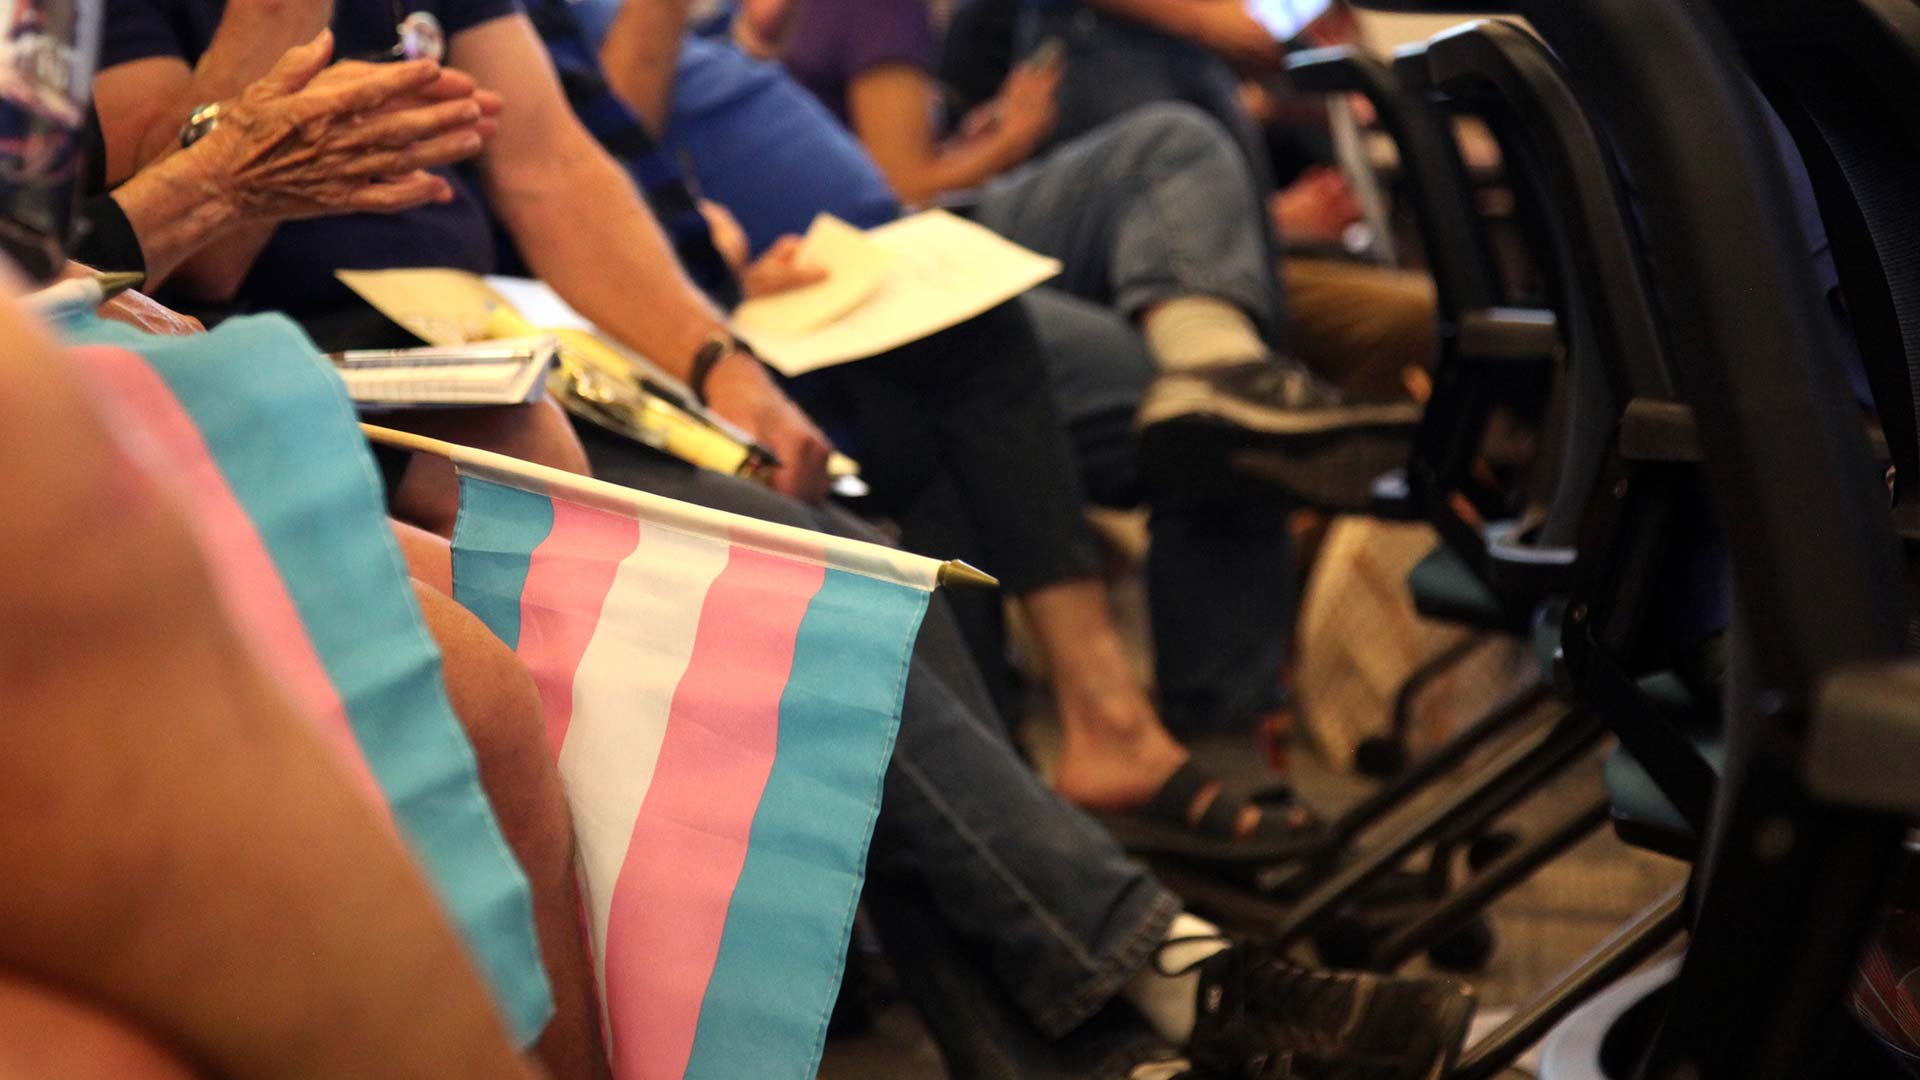 Tucson judge certifies class action status for transgender birth certificate case